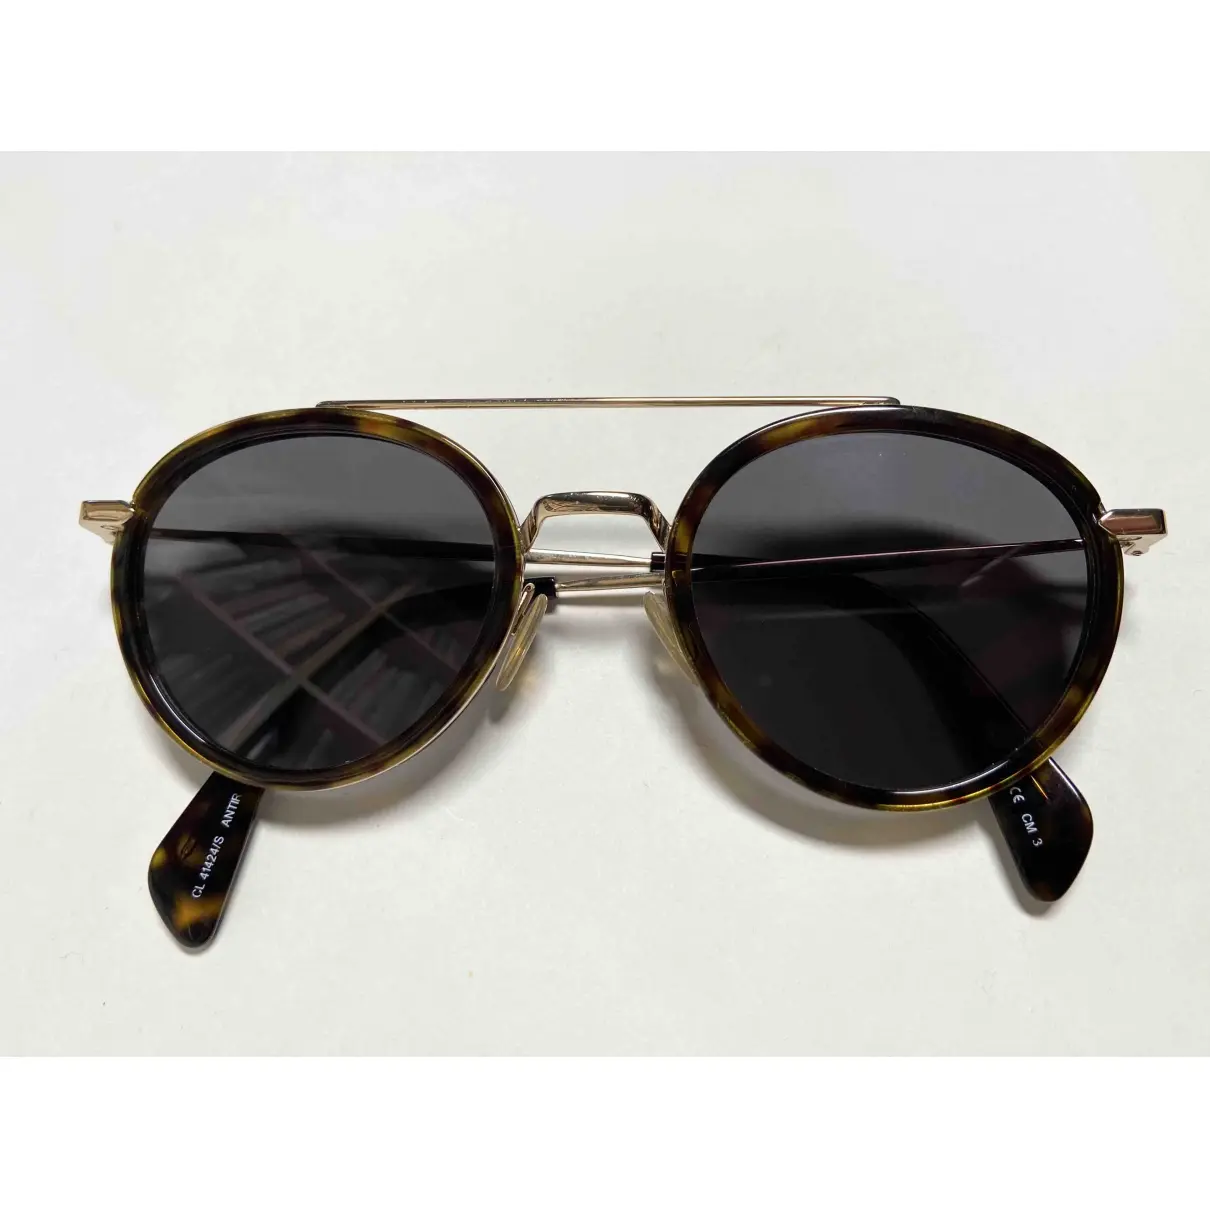 Buy Celine Aviator sunglasses online